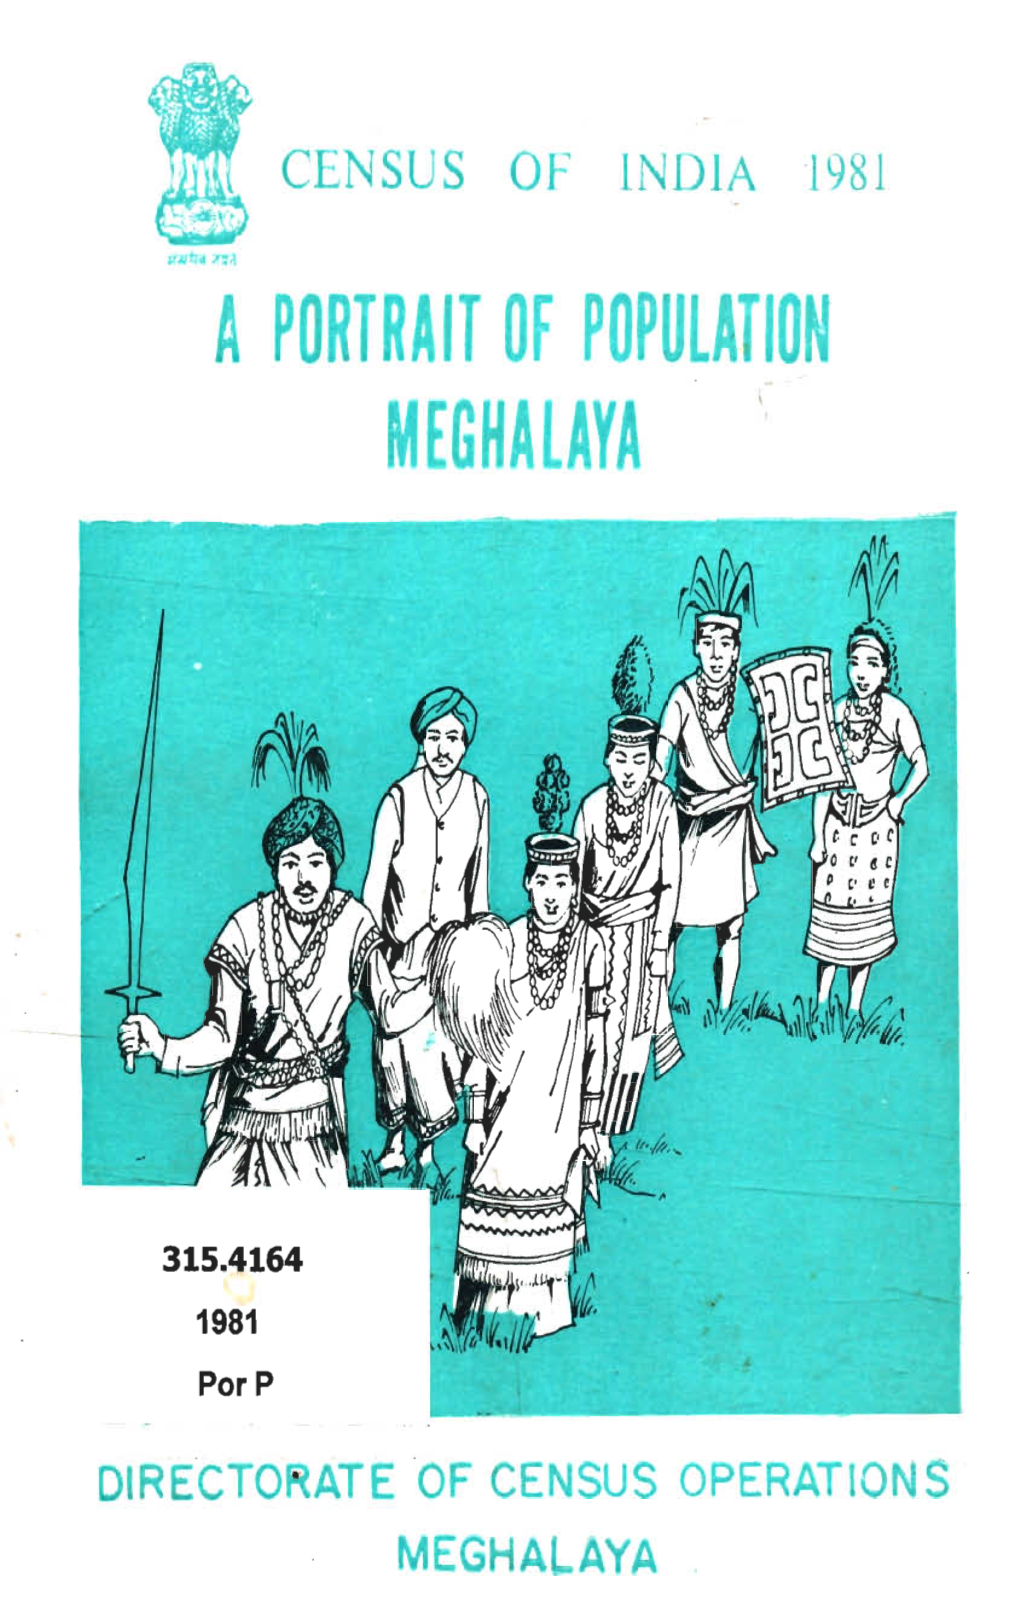 Portrait of Population Meghalaya